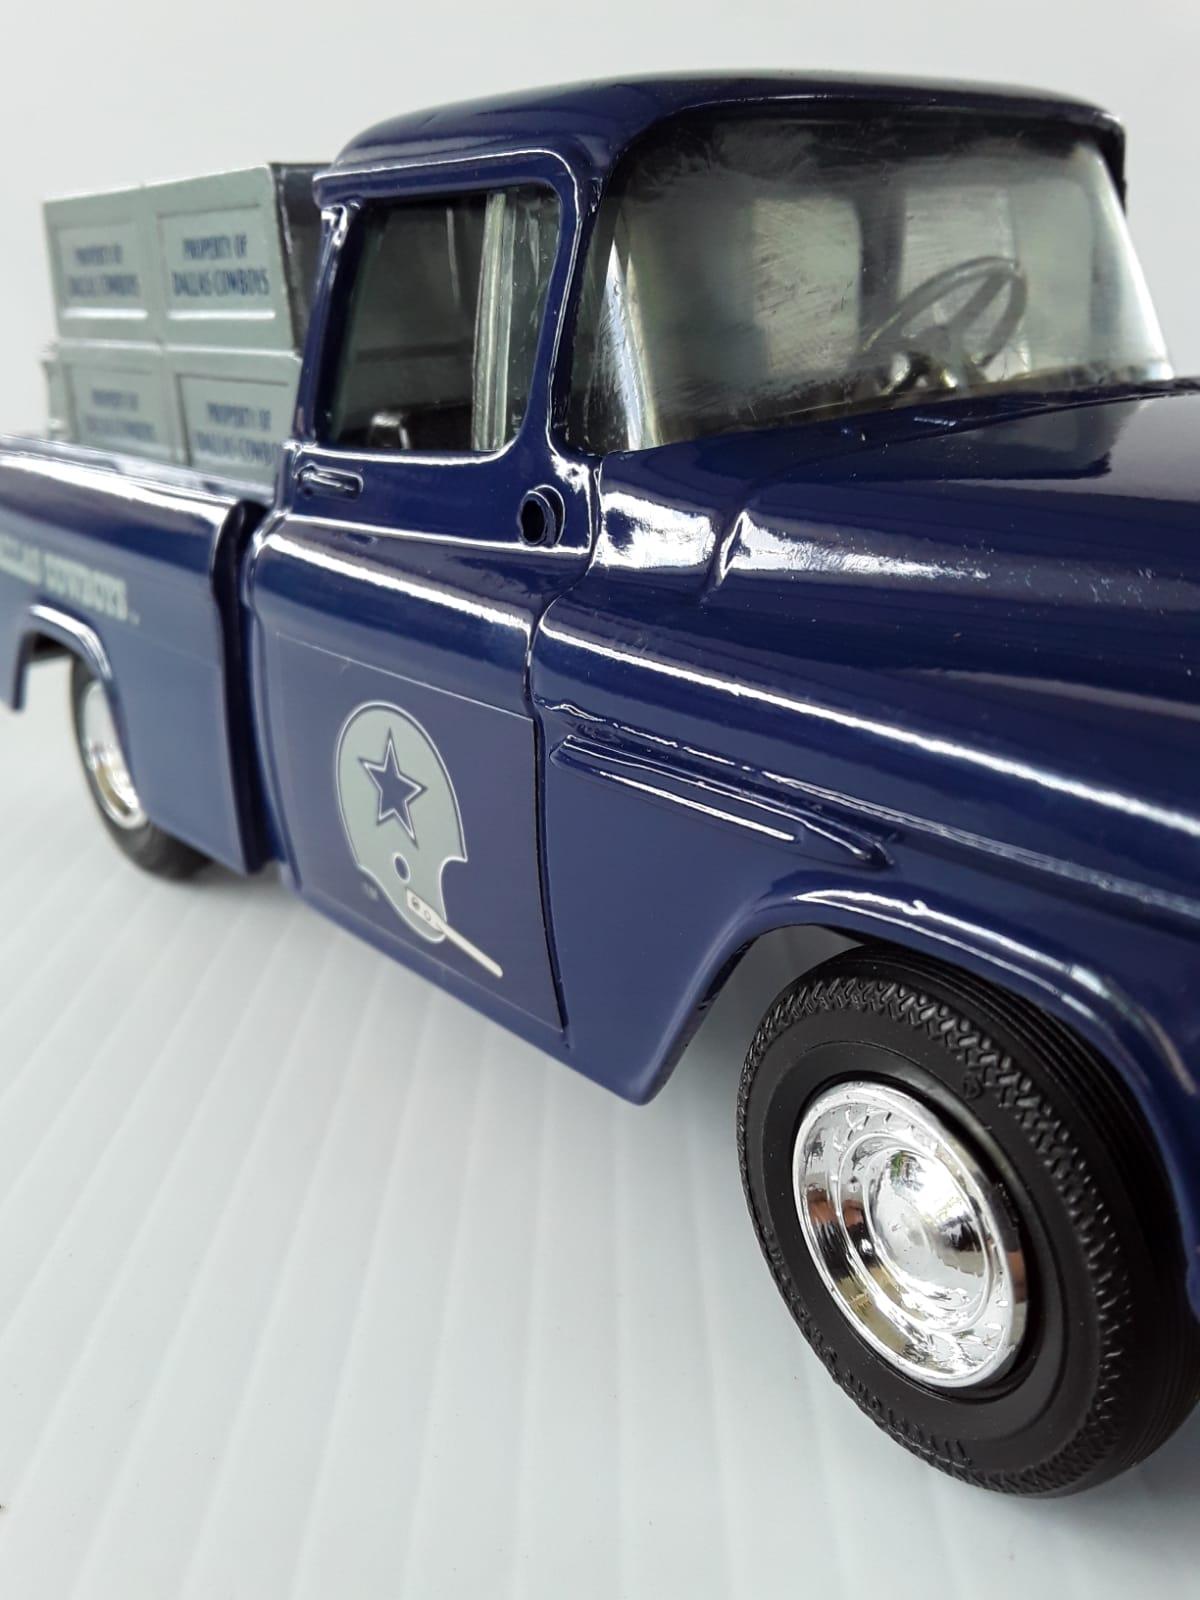 (3) Dallas Cowboys Die Cast Metal Bank 1955 Replica Chev Cameo Pickup Truck